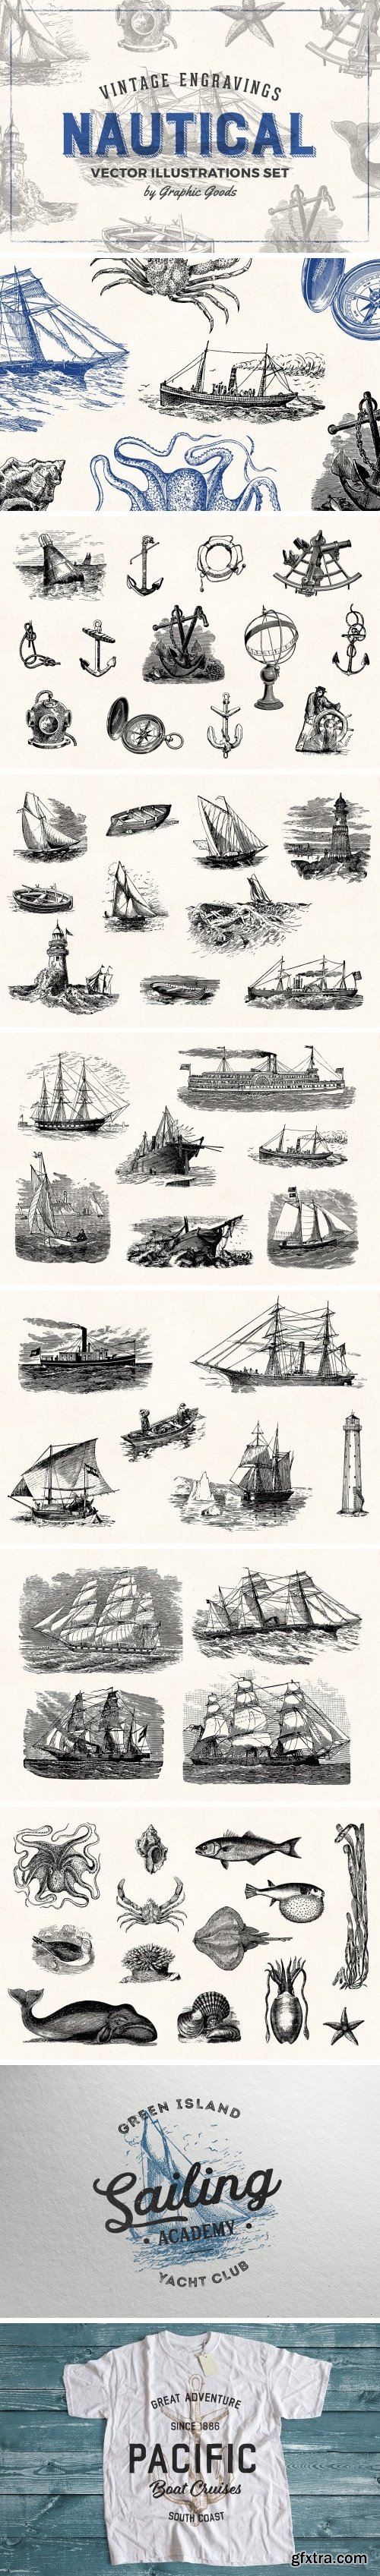 CM - Nautical Engraving Illustrations 1461014